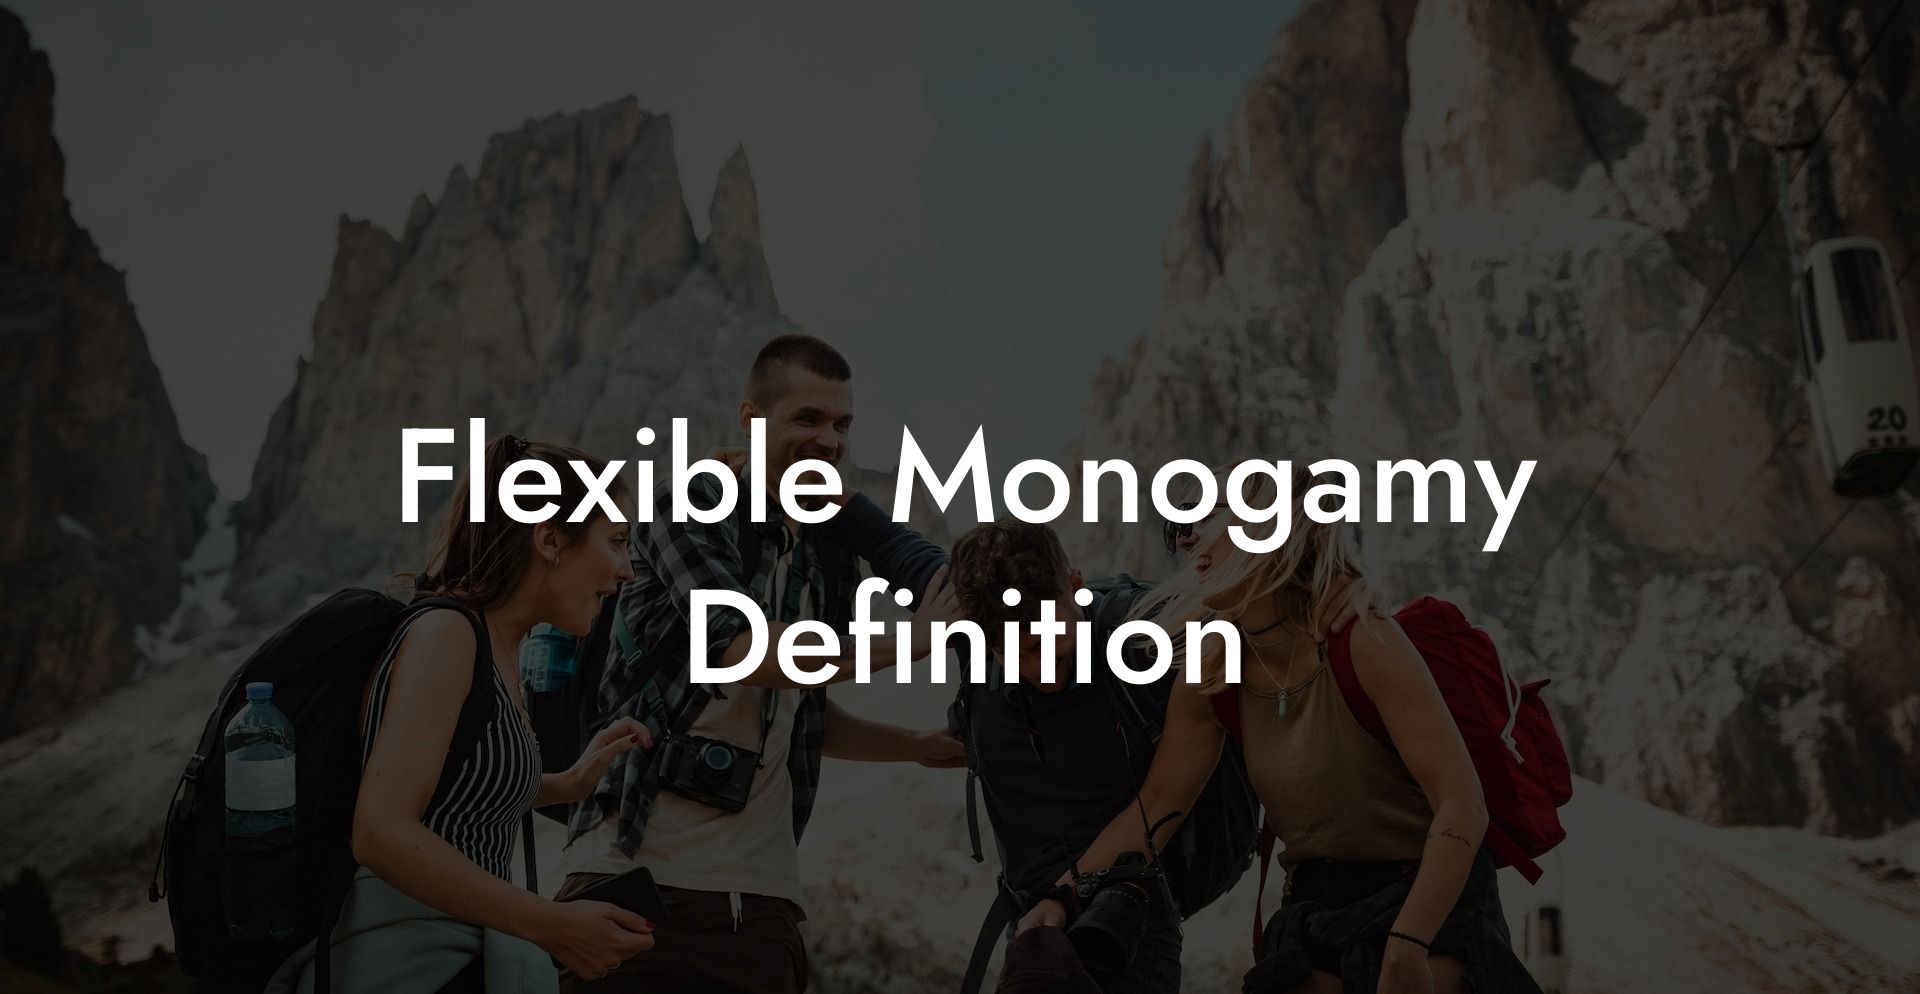 Flexible Monogamy Definition